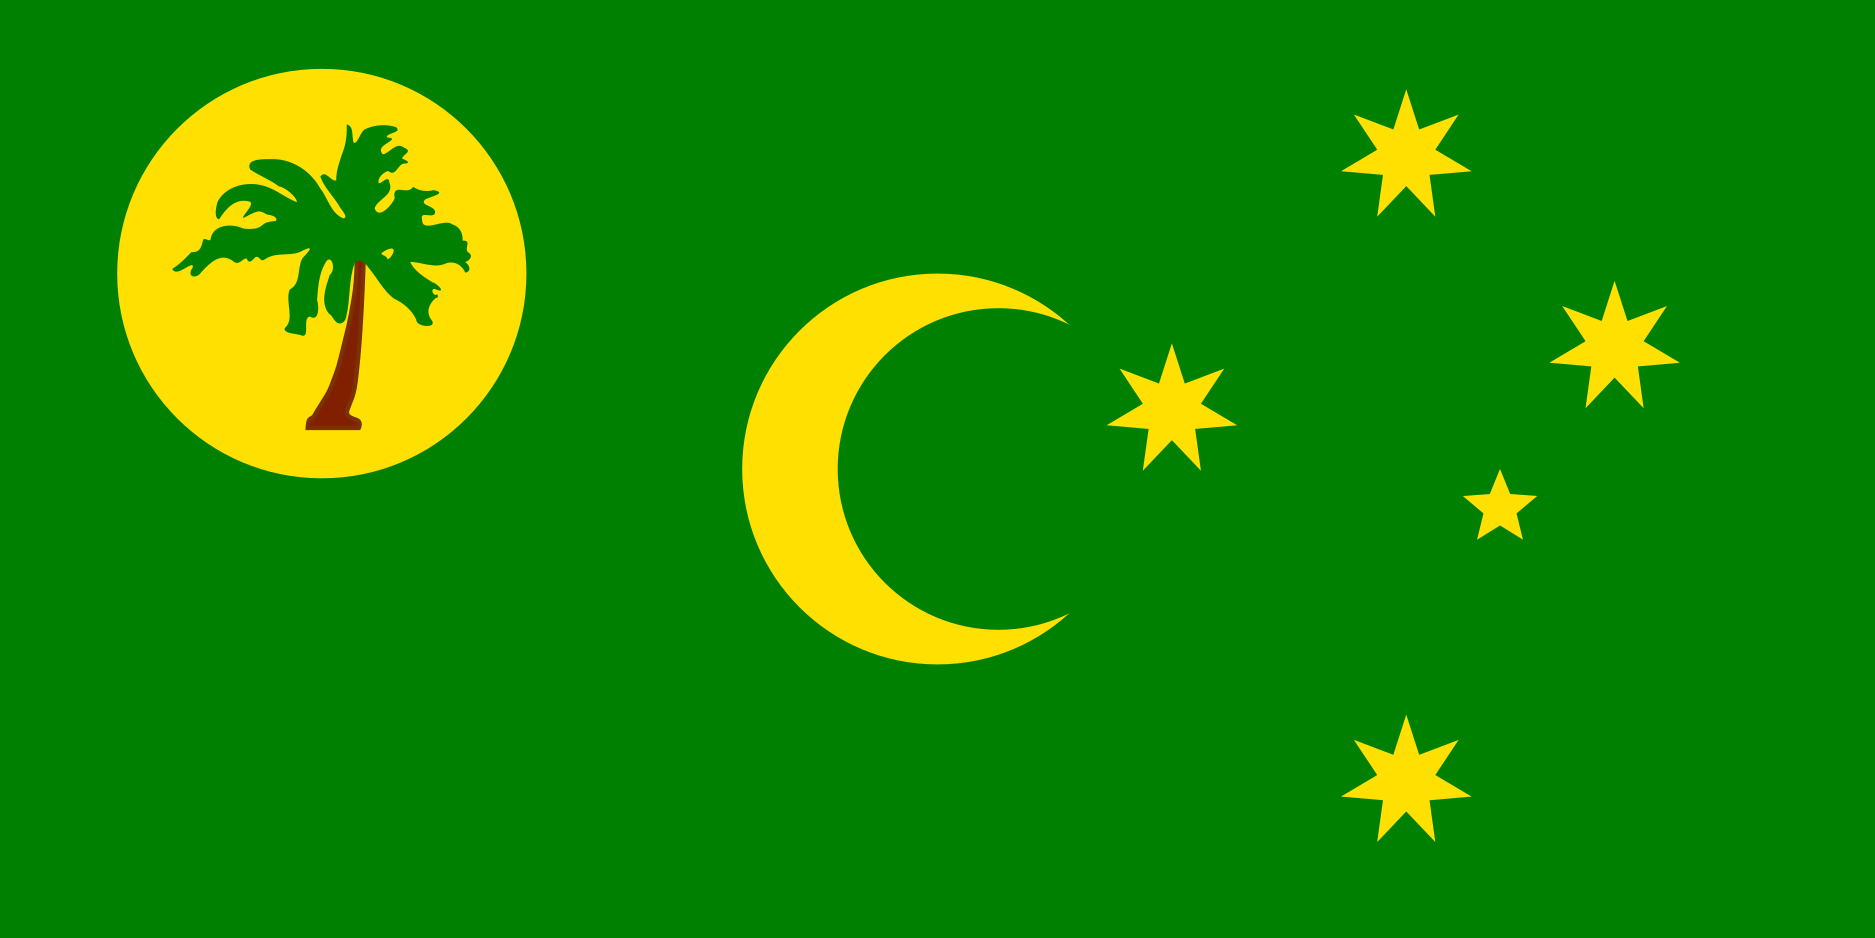 The Cocos Keeling Islands Flag Image - Free Download